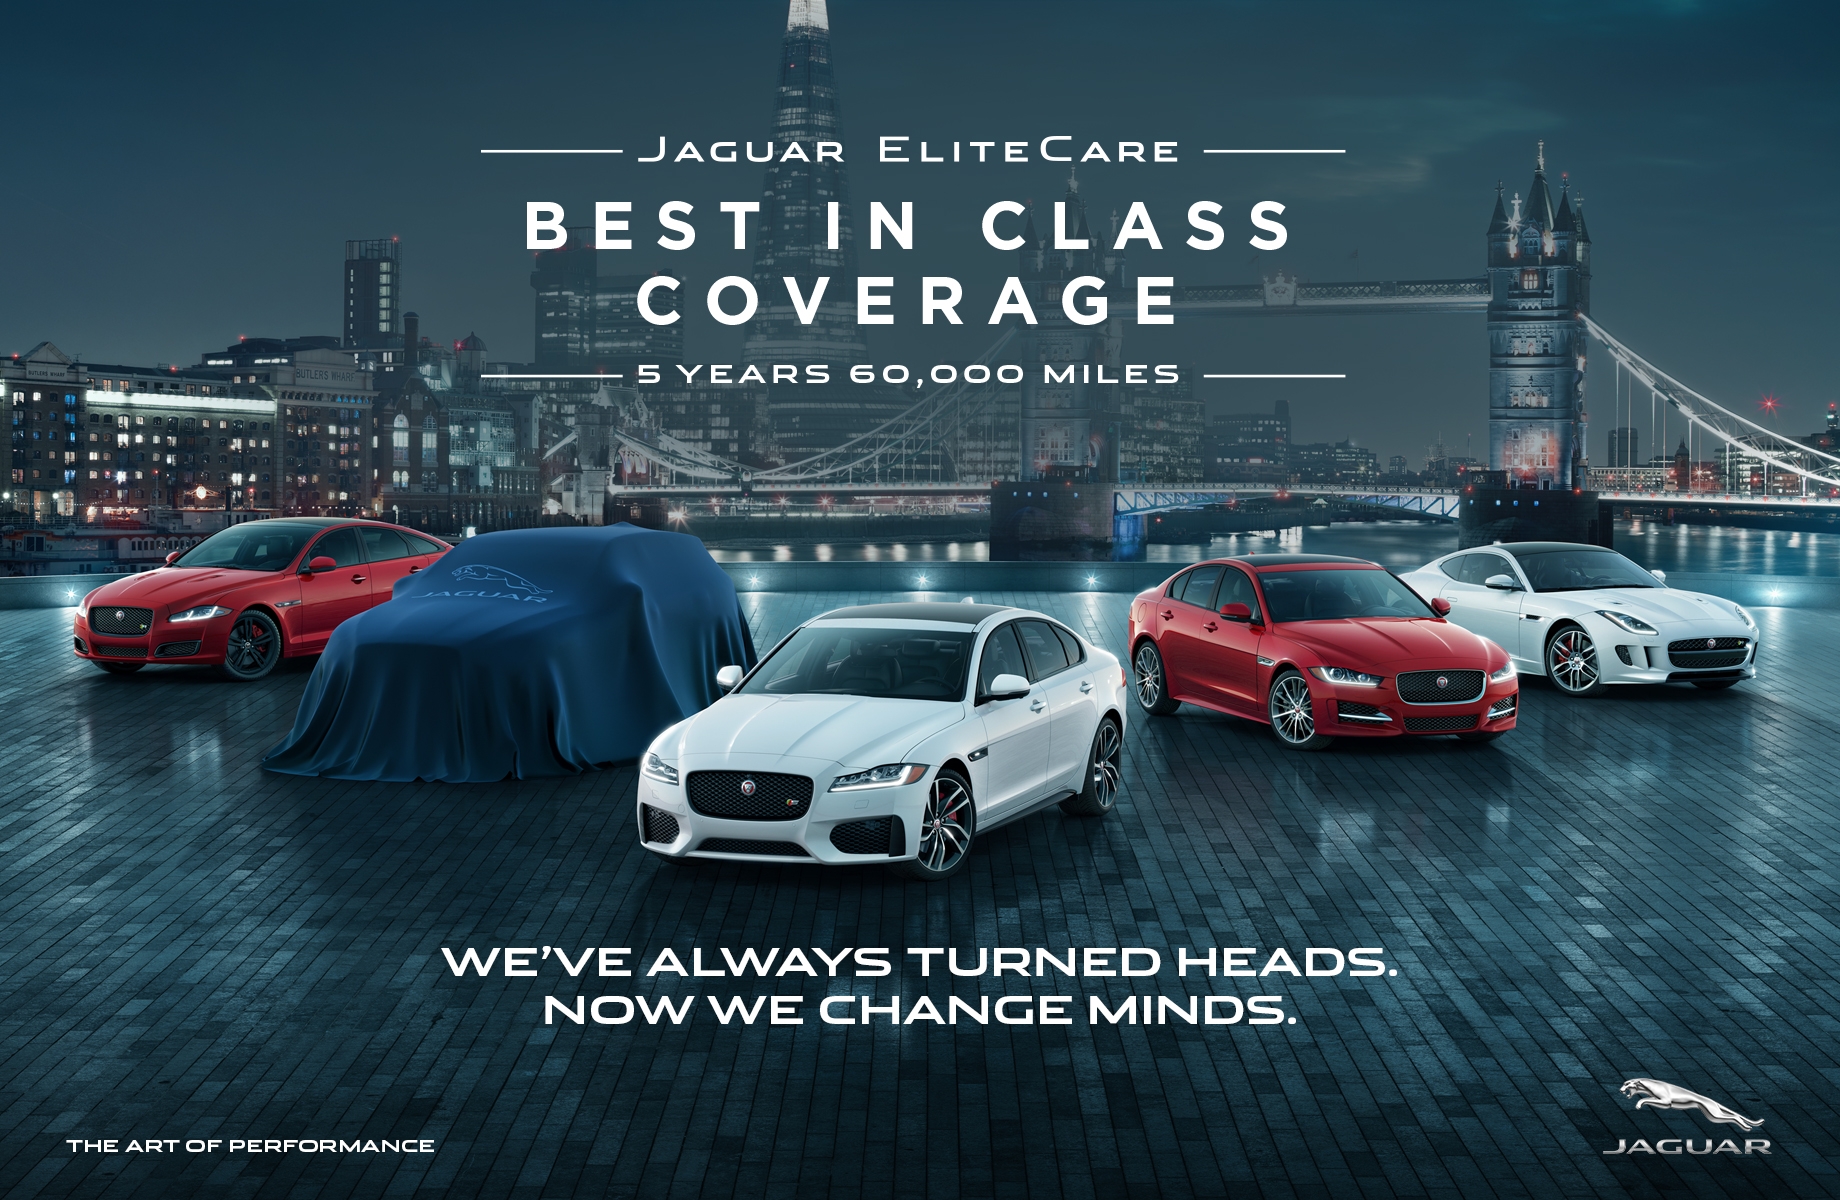 Jaguar Adding EliteCare To Help Boost Sales